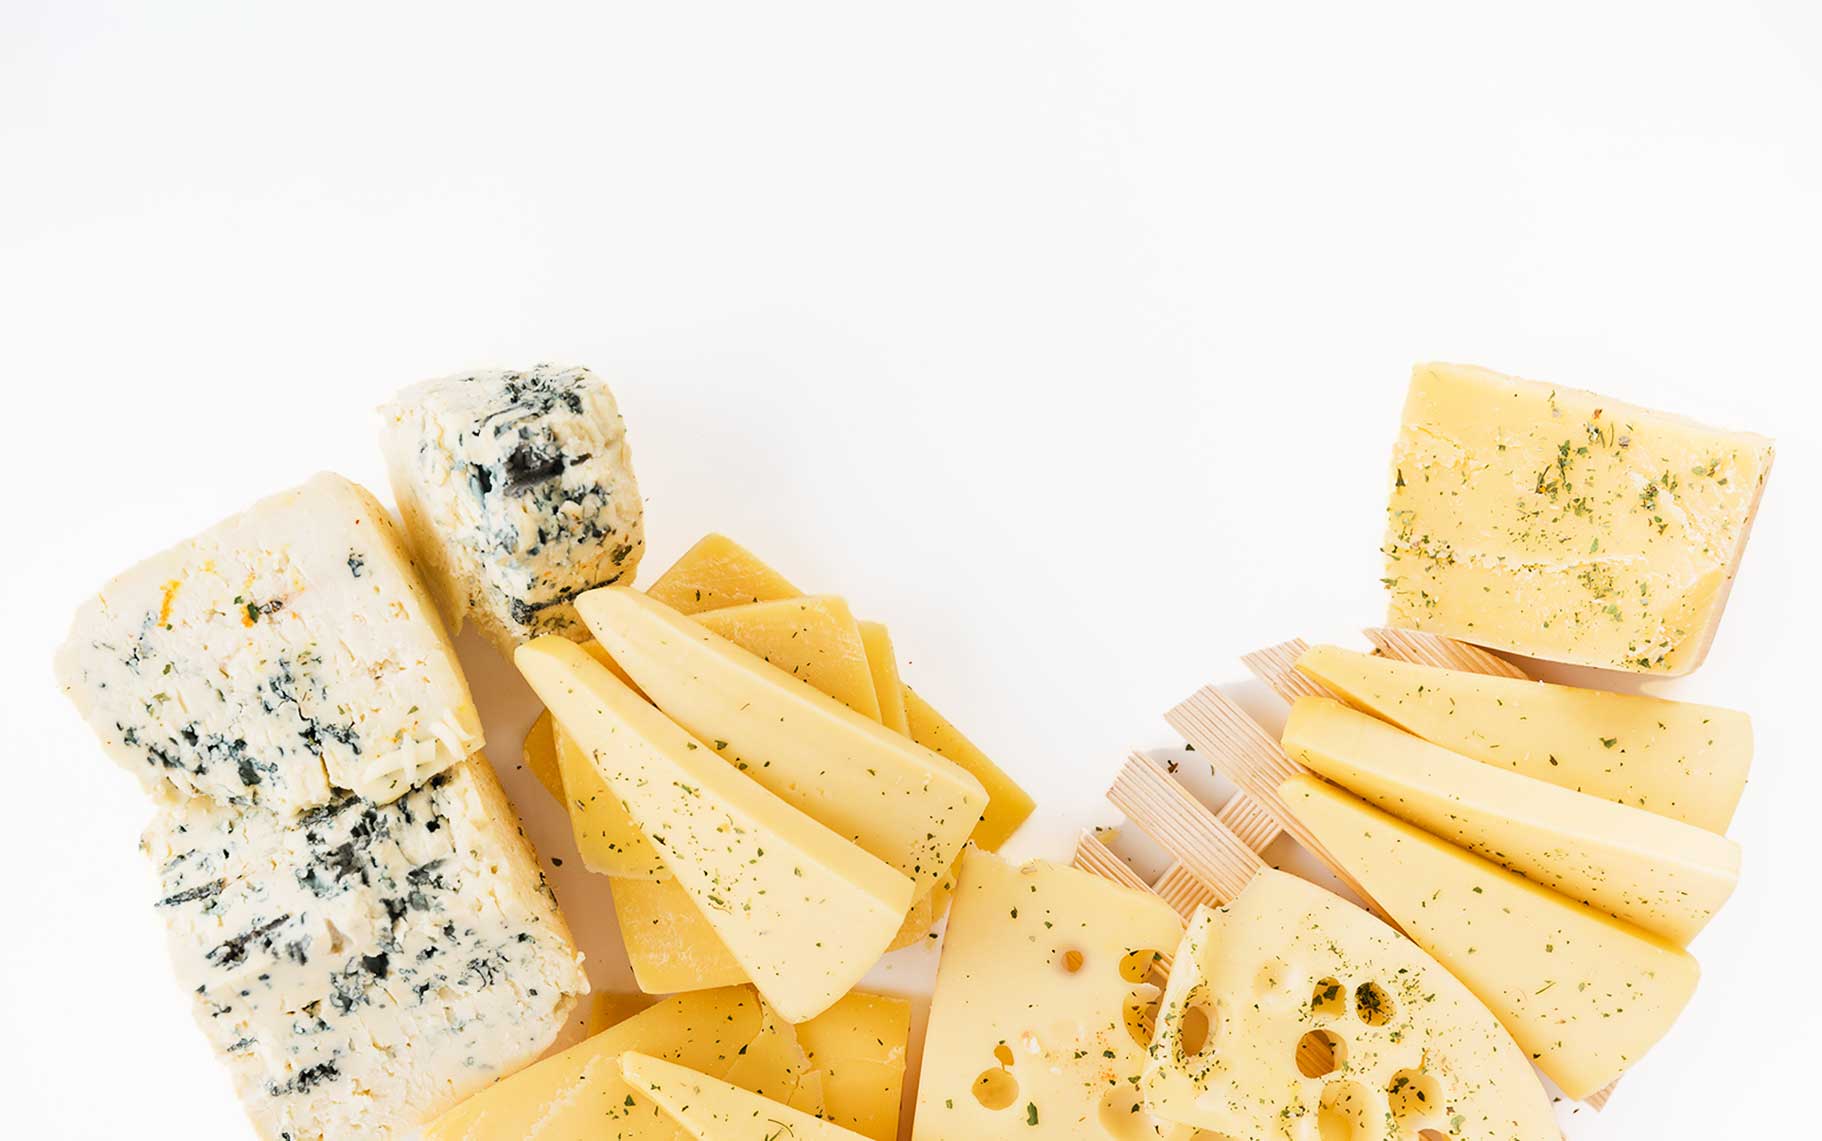 Imagen de diferentes tipos de queso